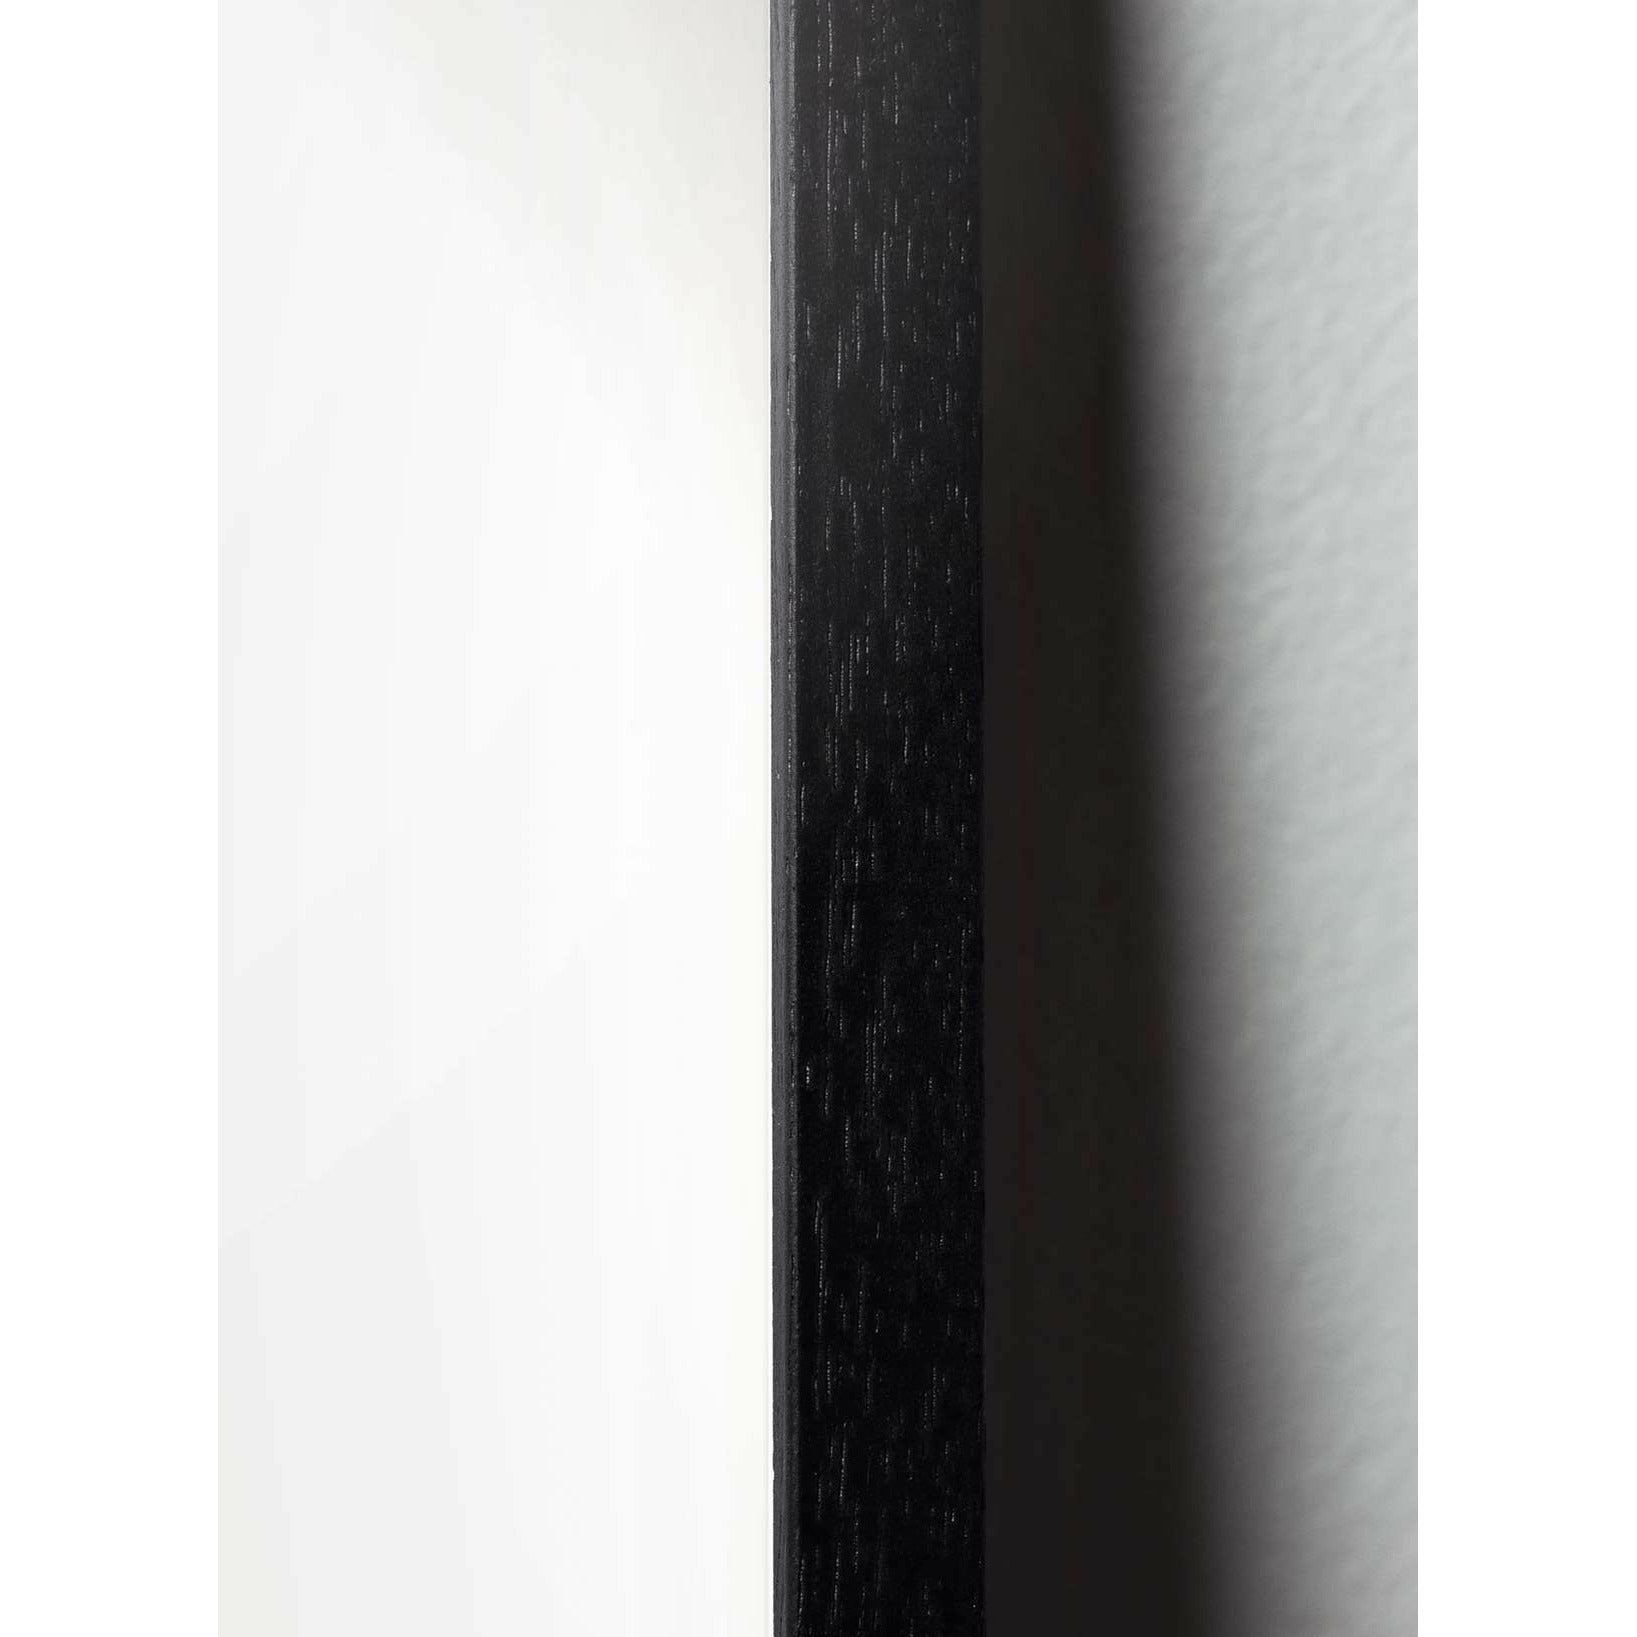 Brainchild Blumentopf Design Icon Poster, Rahmen in schwarz lackiertem Holz A5, grau